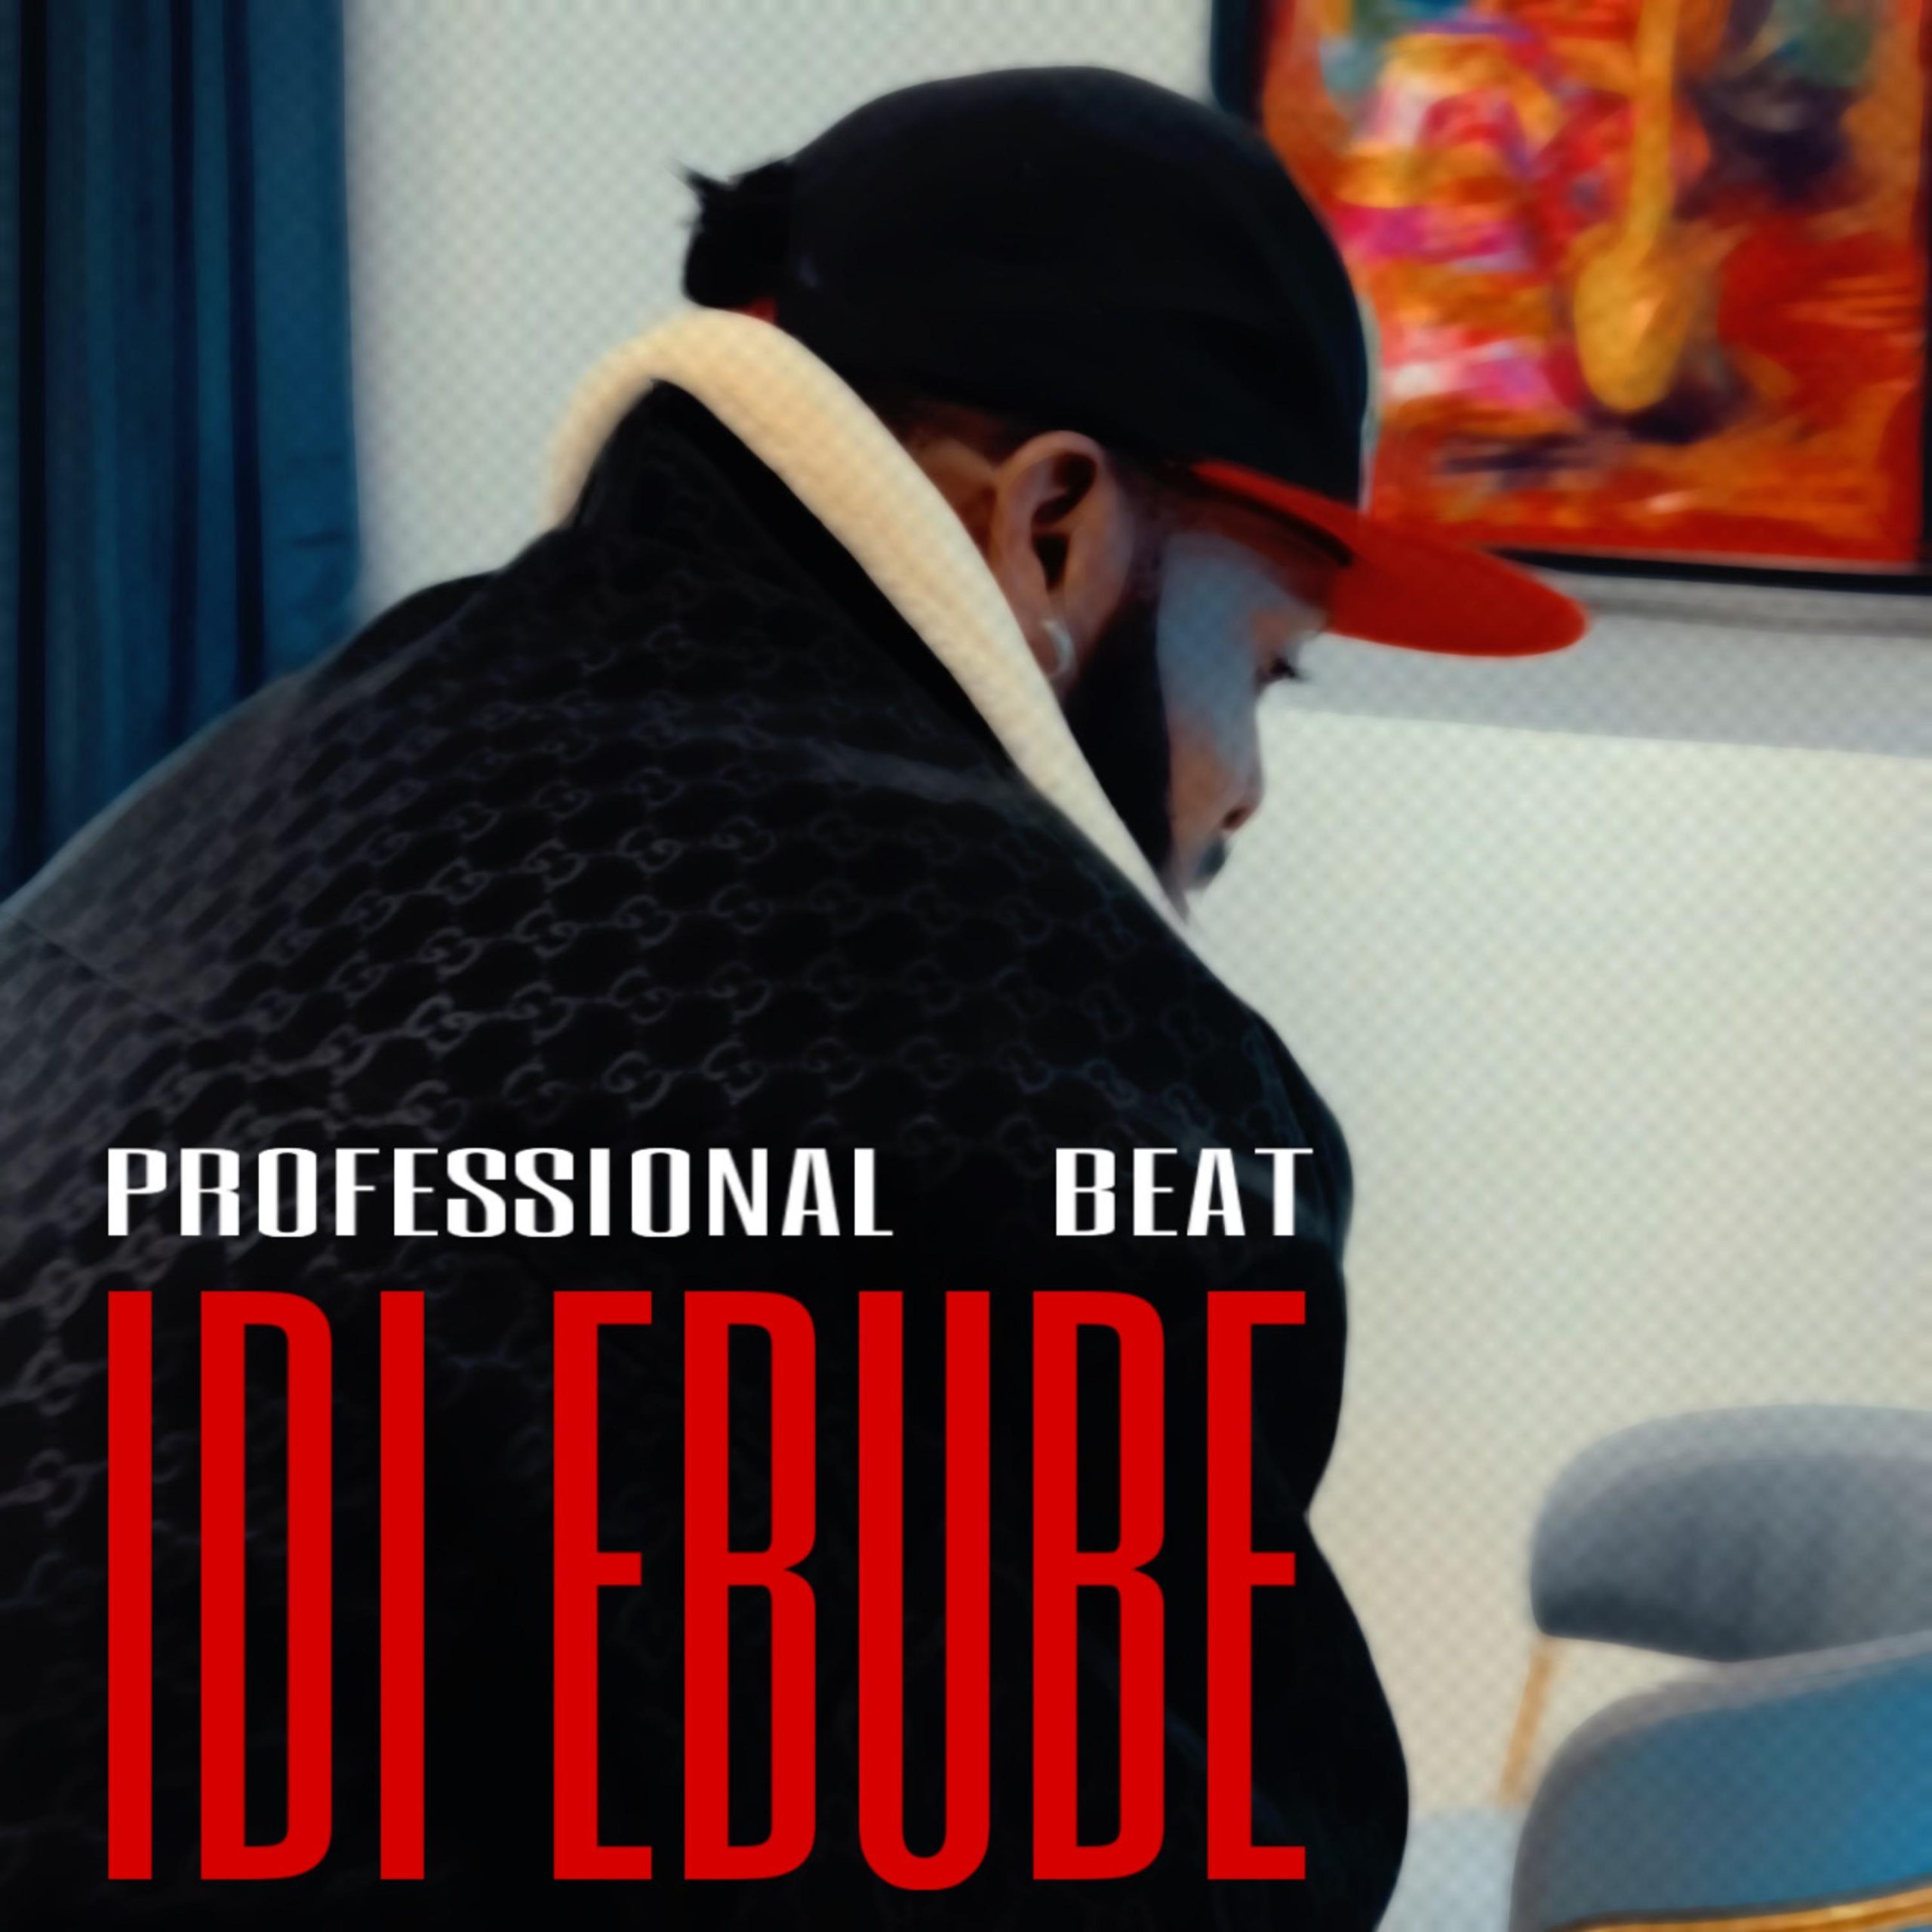 Professional Beat Idi Ebube scaled